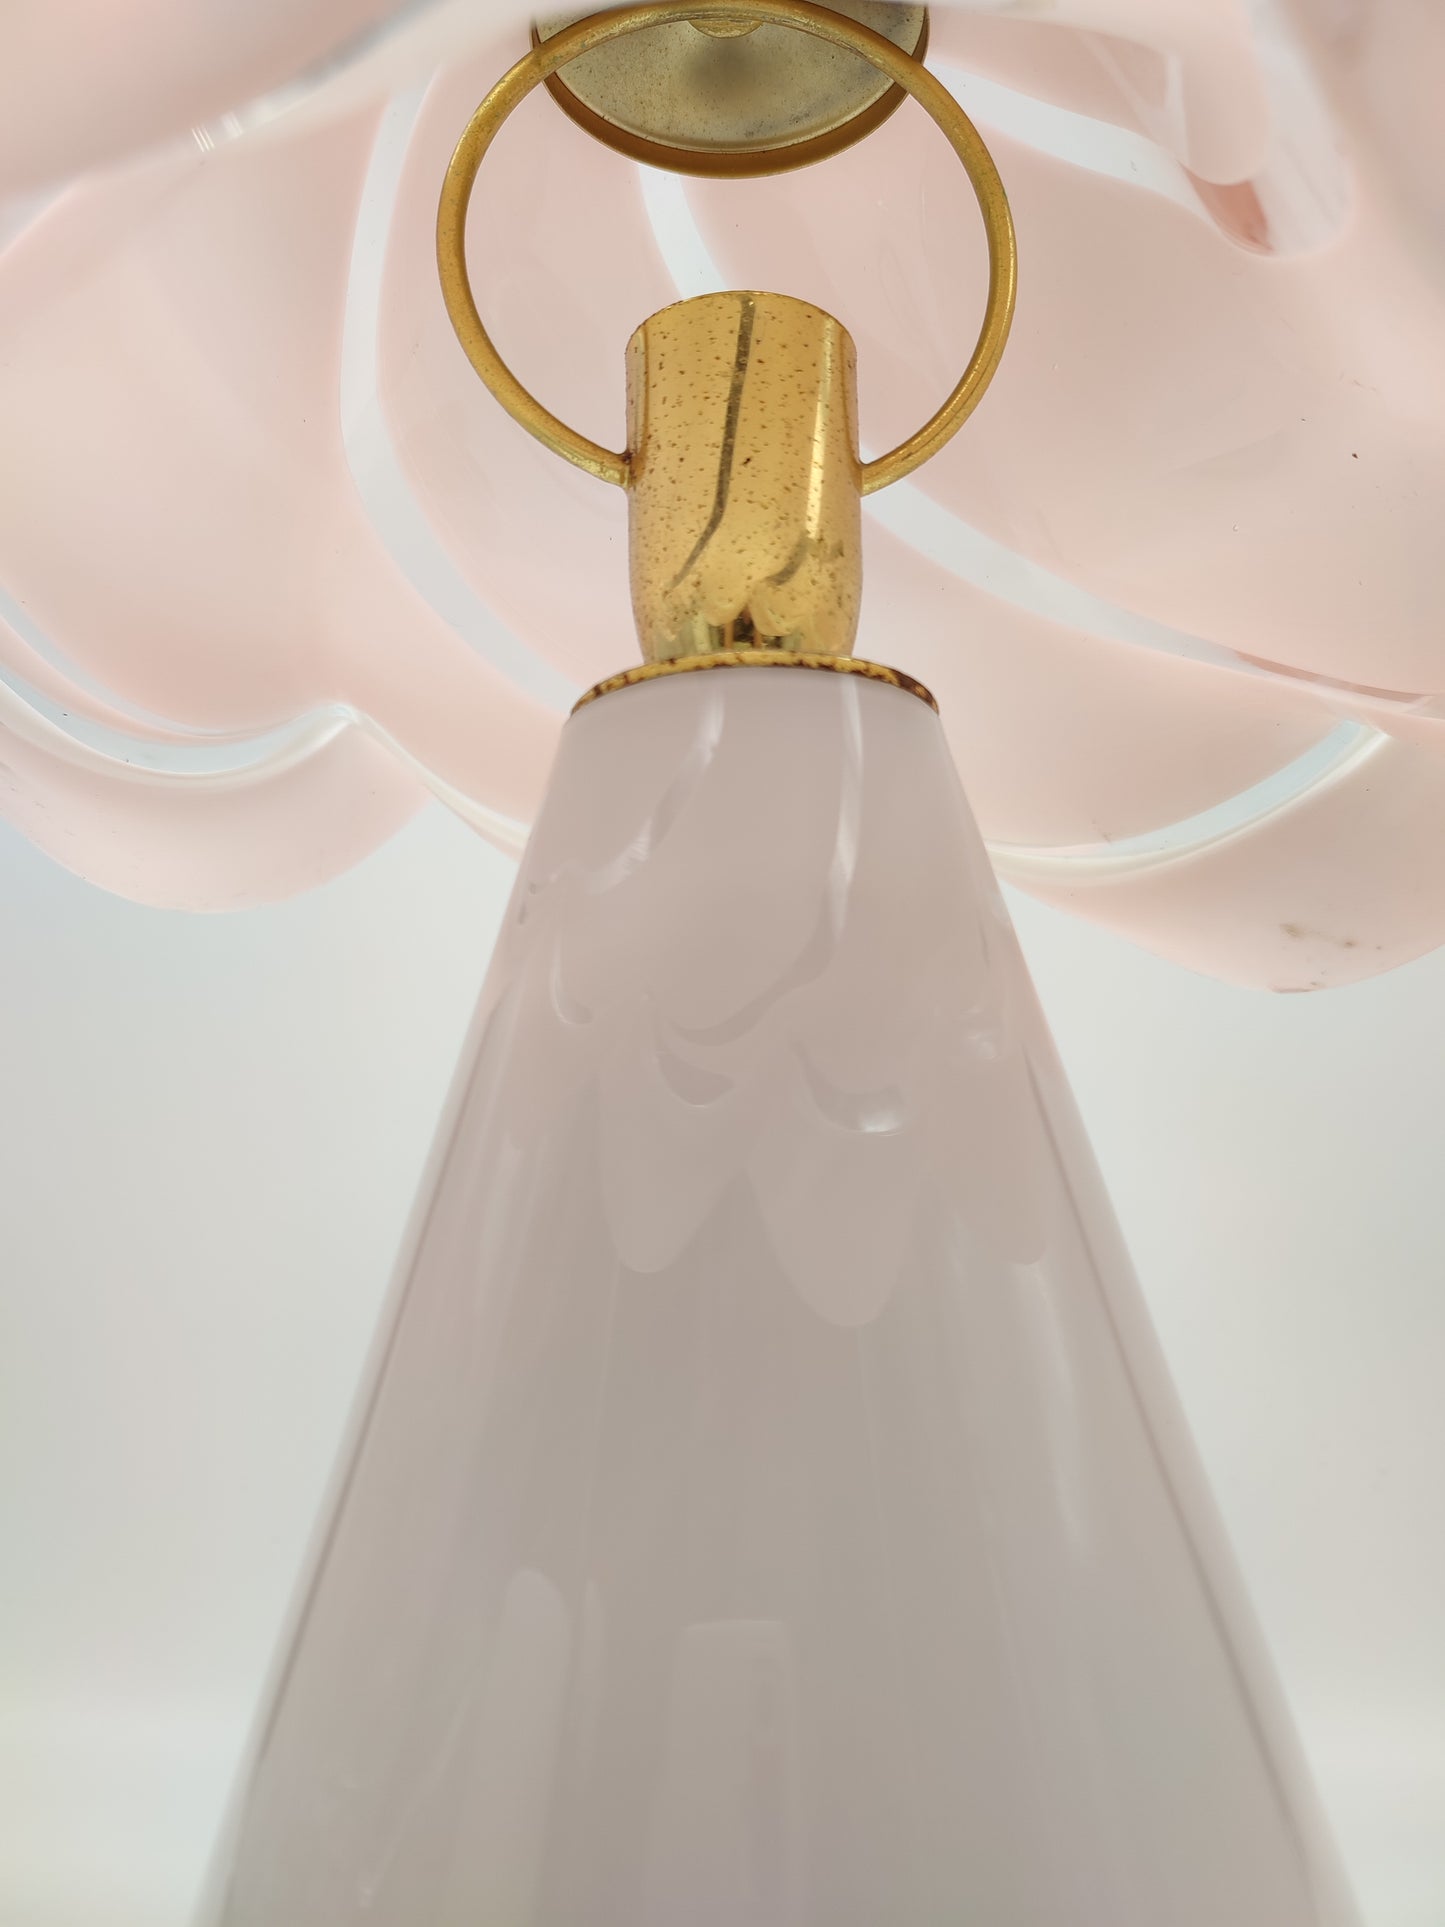 60312 Lampada in vetro di Murano rosa